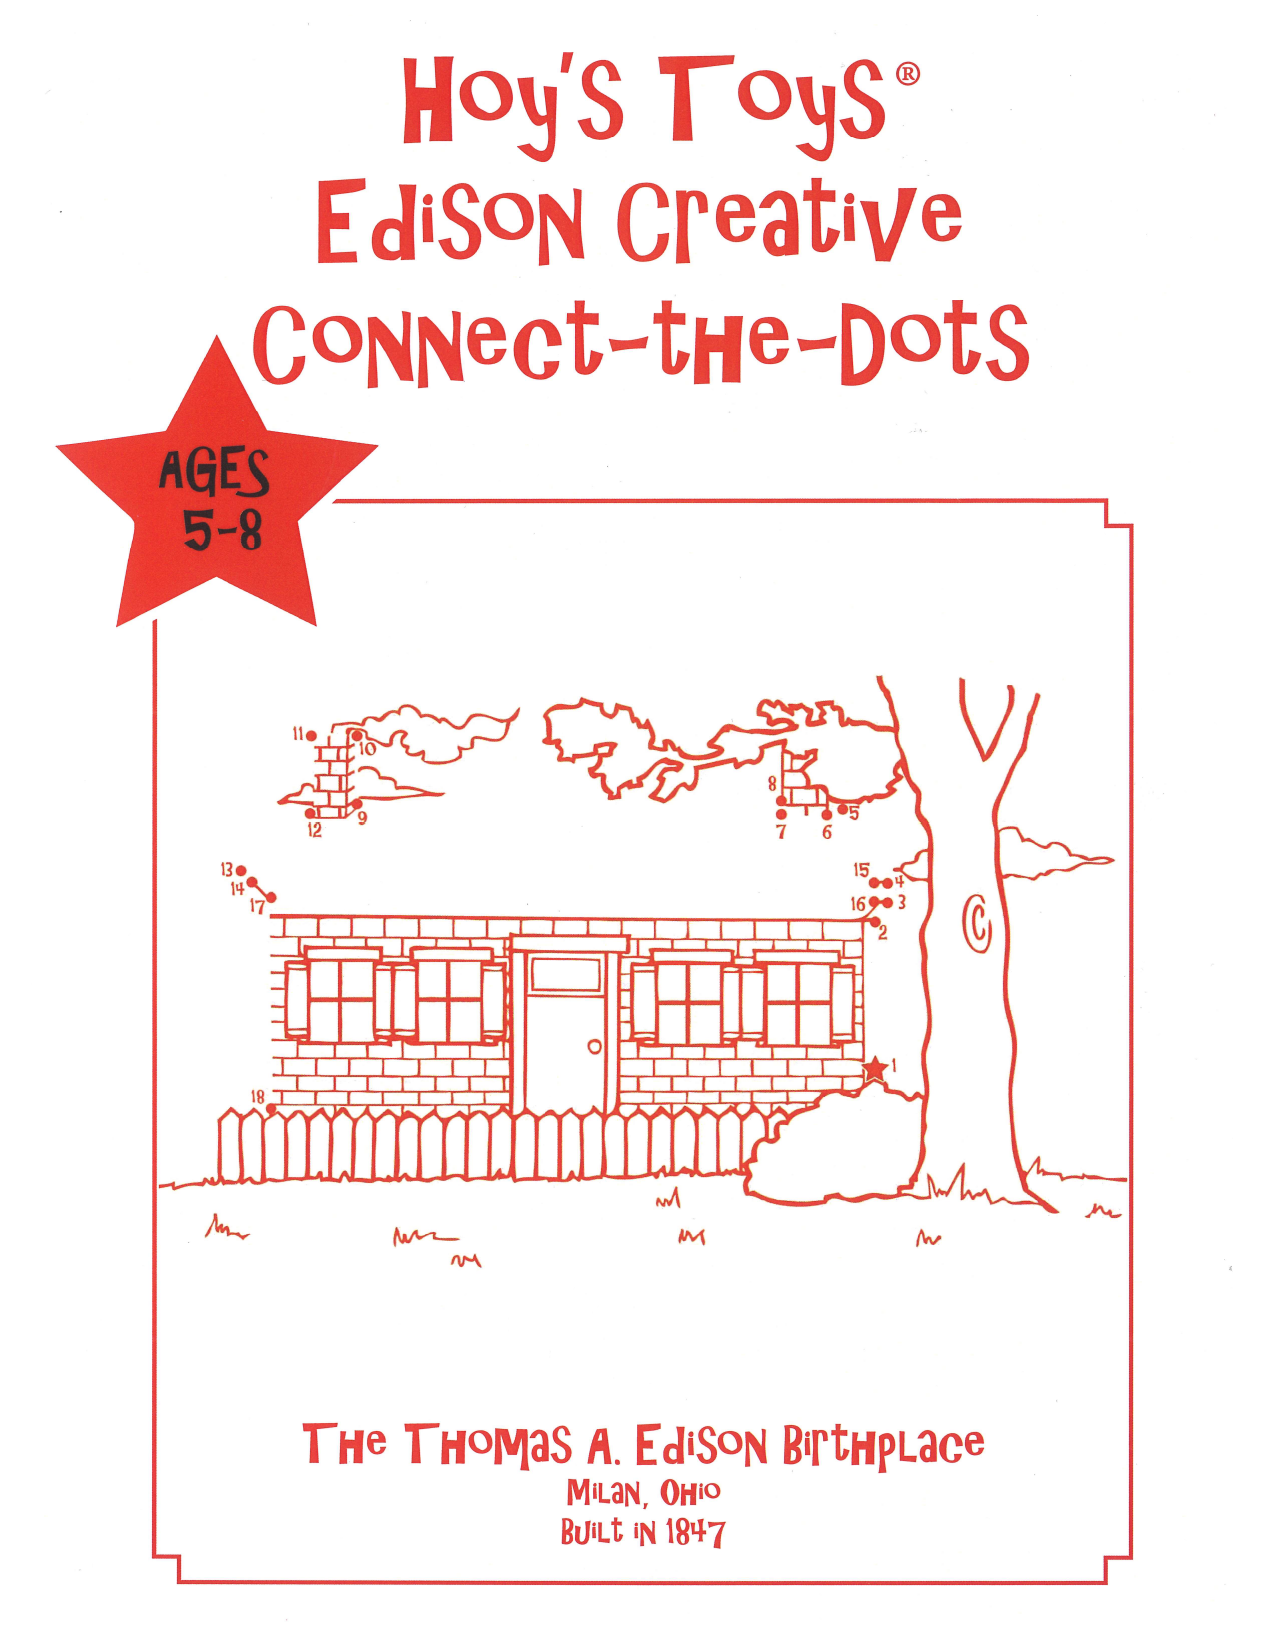 Hoy's Toys Thomas Edison Creative Connect-the-Dots (5 to 8)